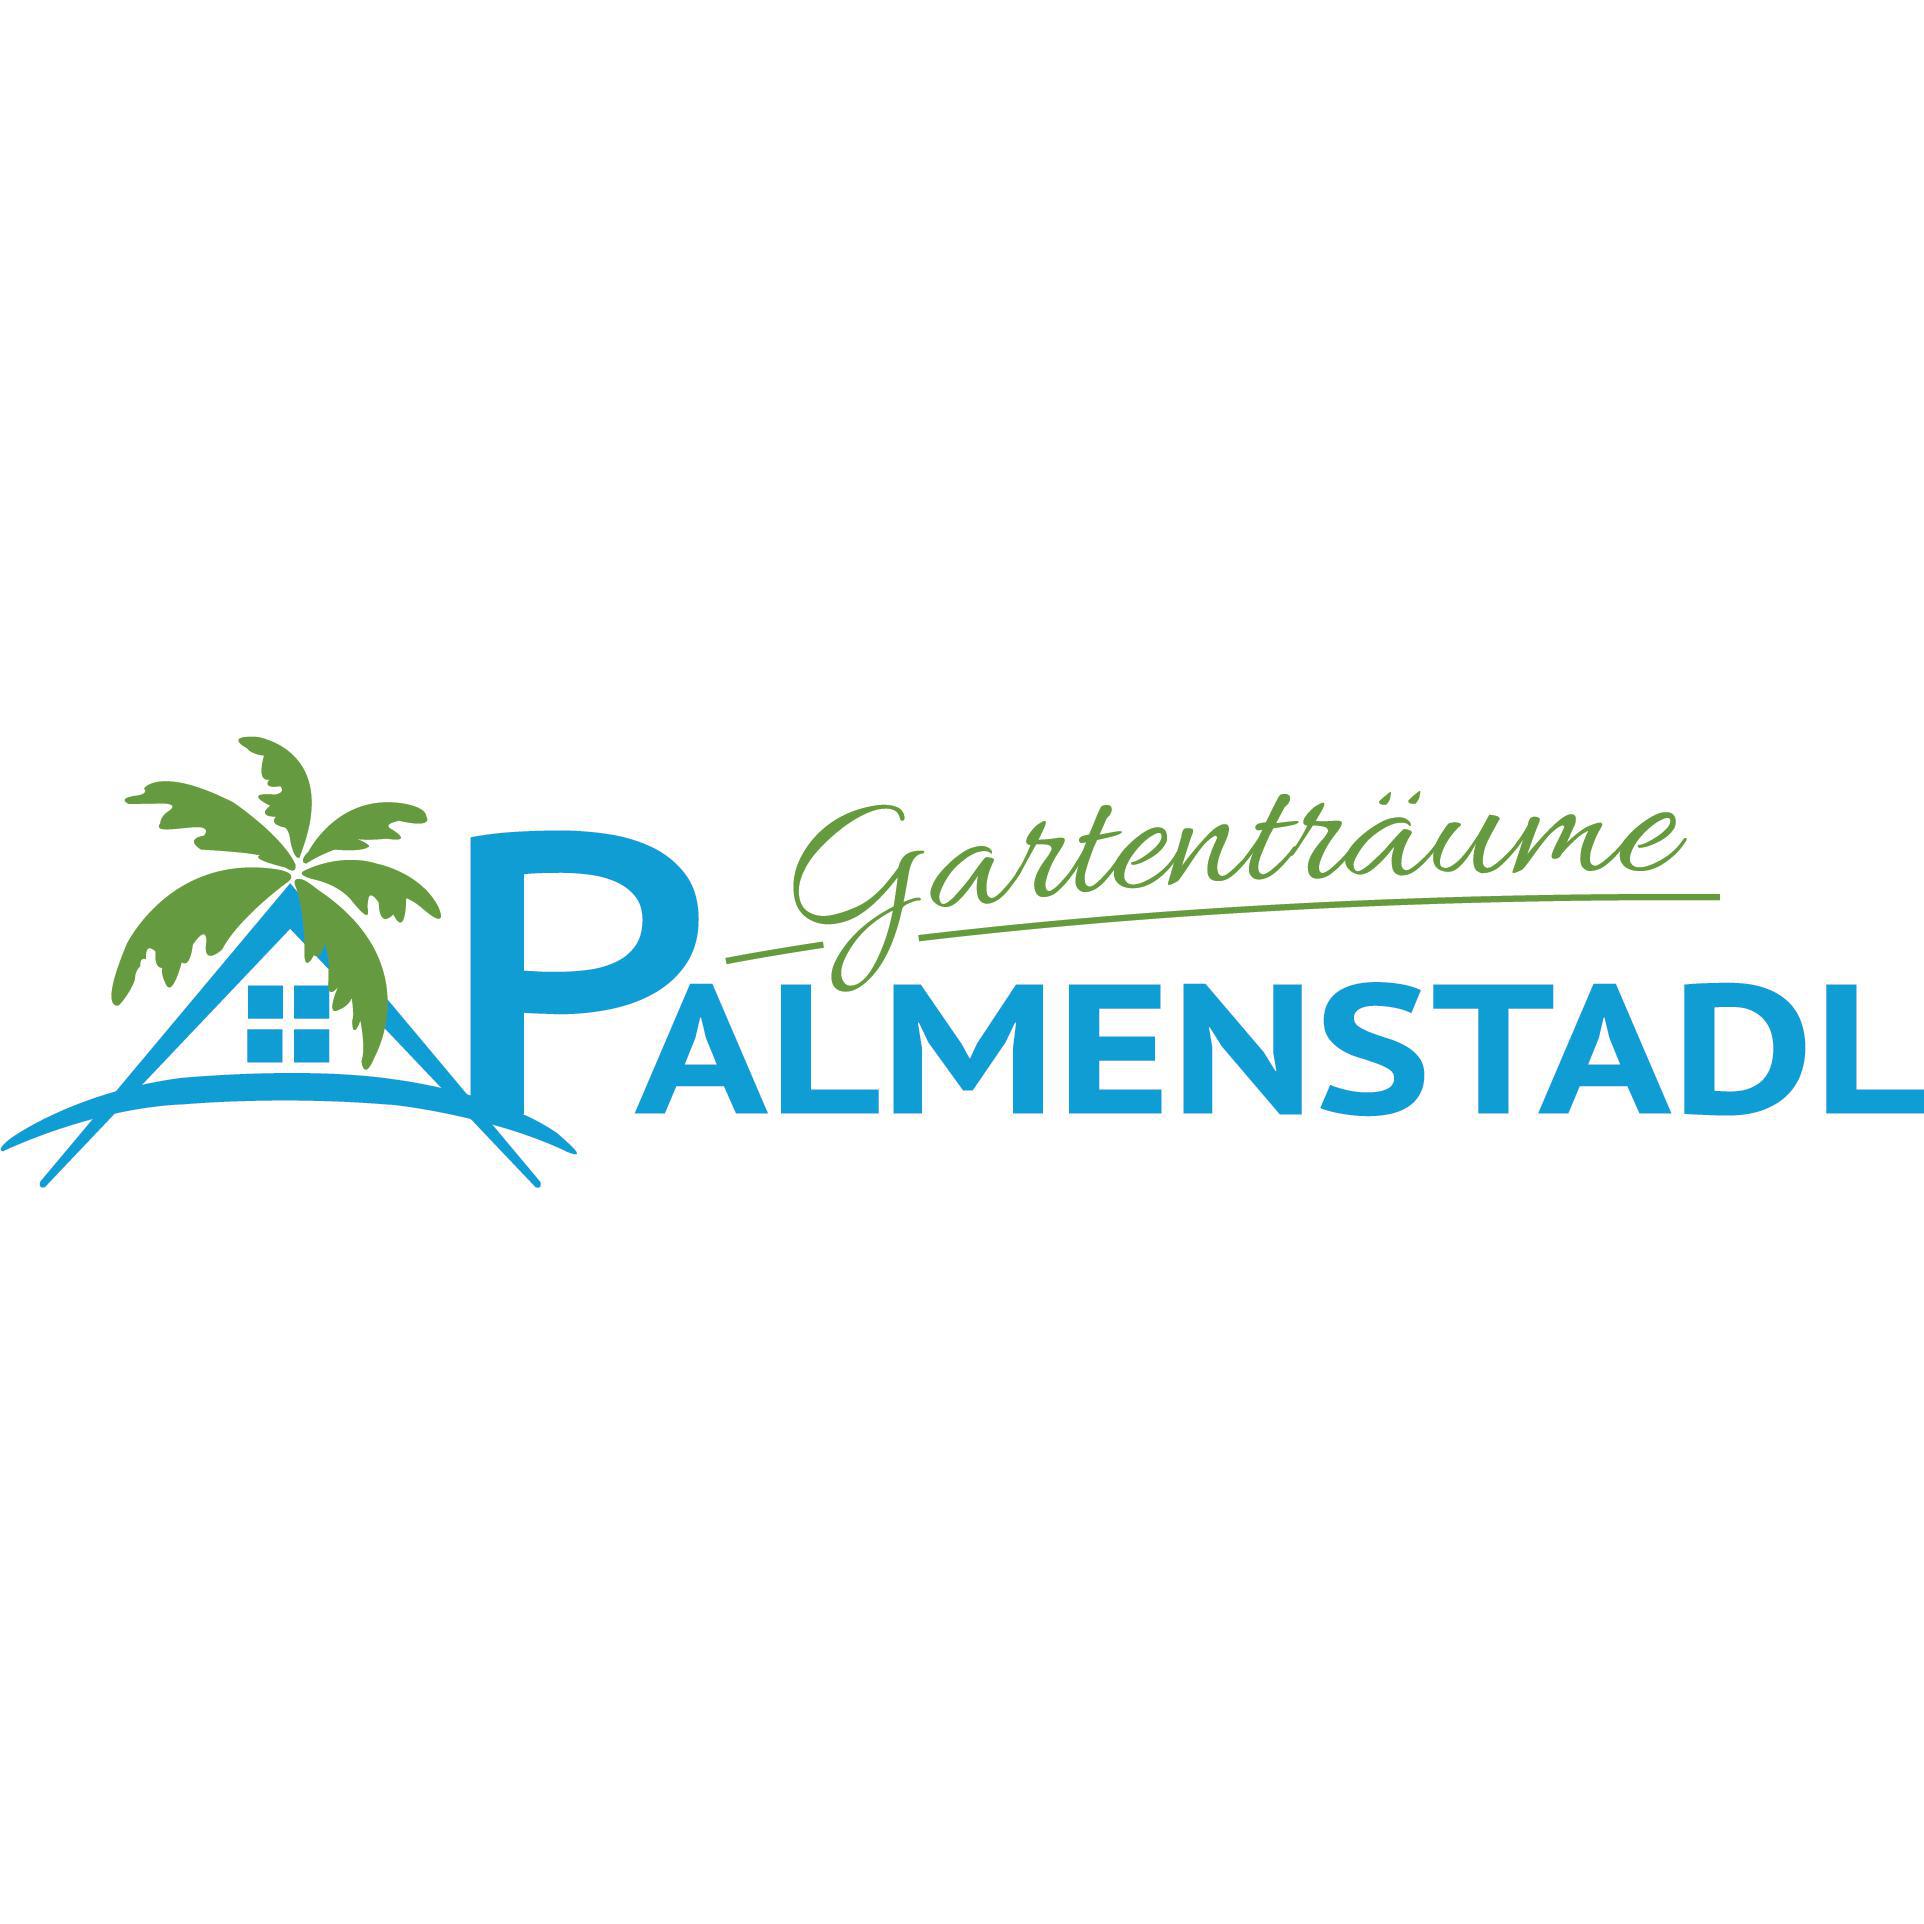 Gabi u. Karl Schindlbeck GbR Der Palmenstadl Logo